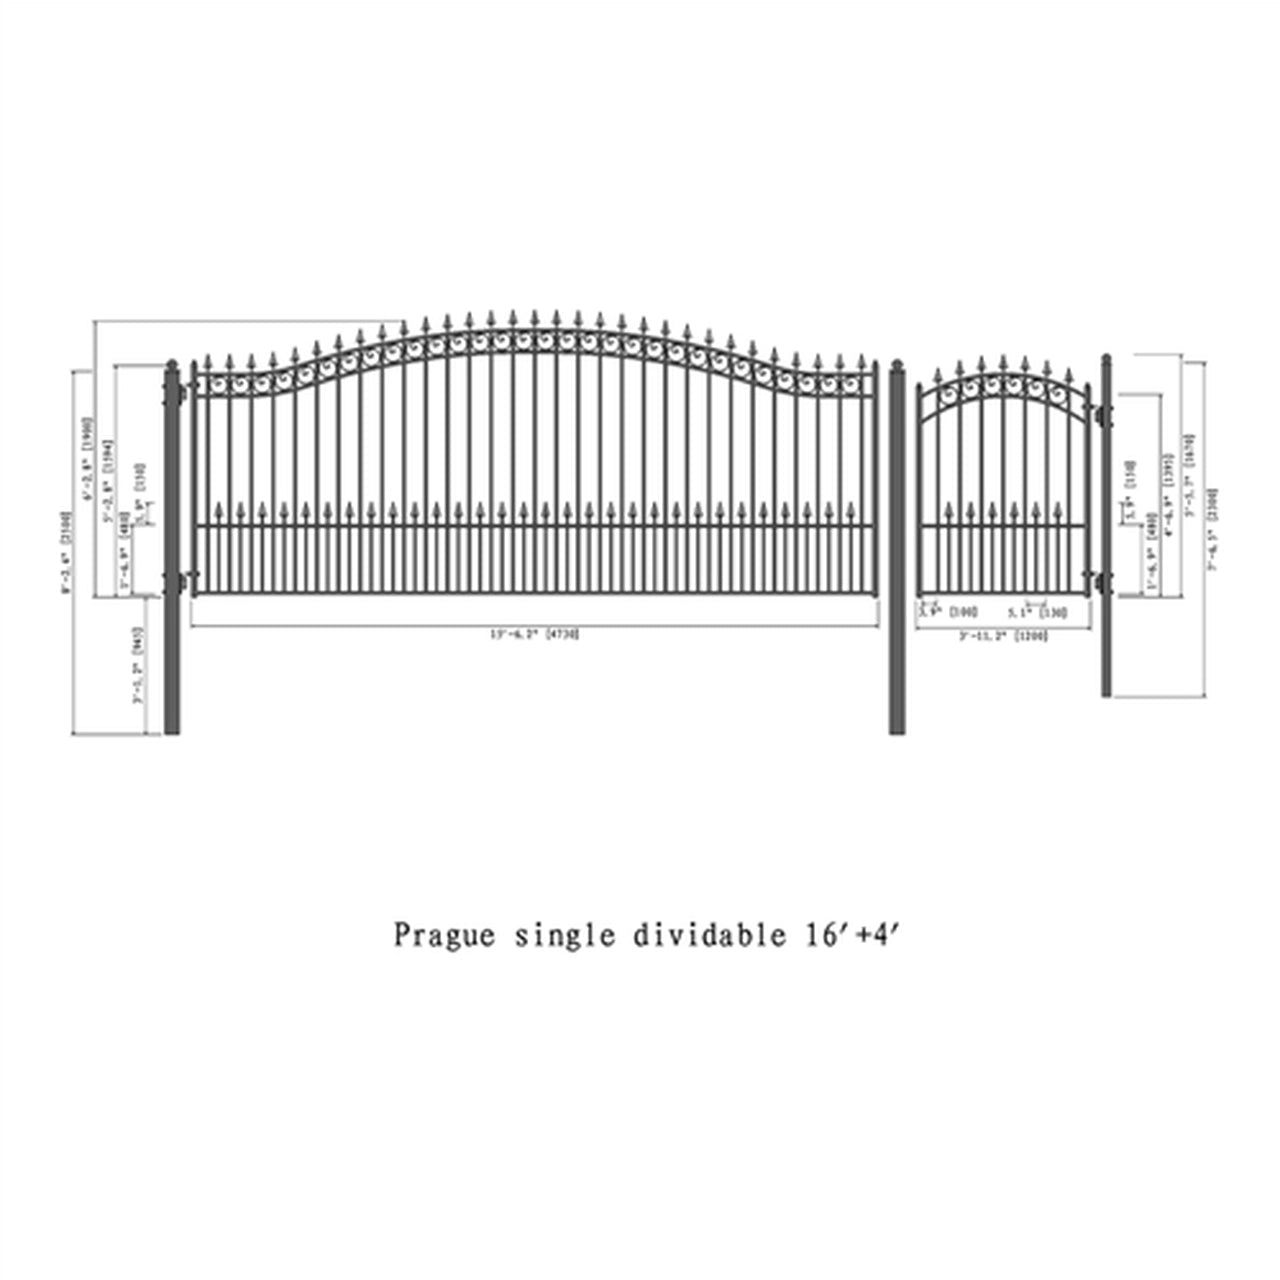 Aleko Steel Single Swing Driveway Gate - PRAGUE Style - 16